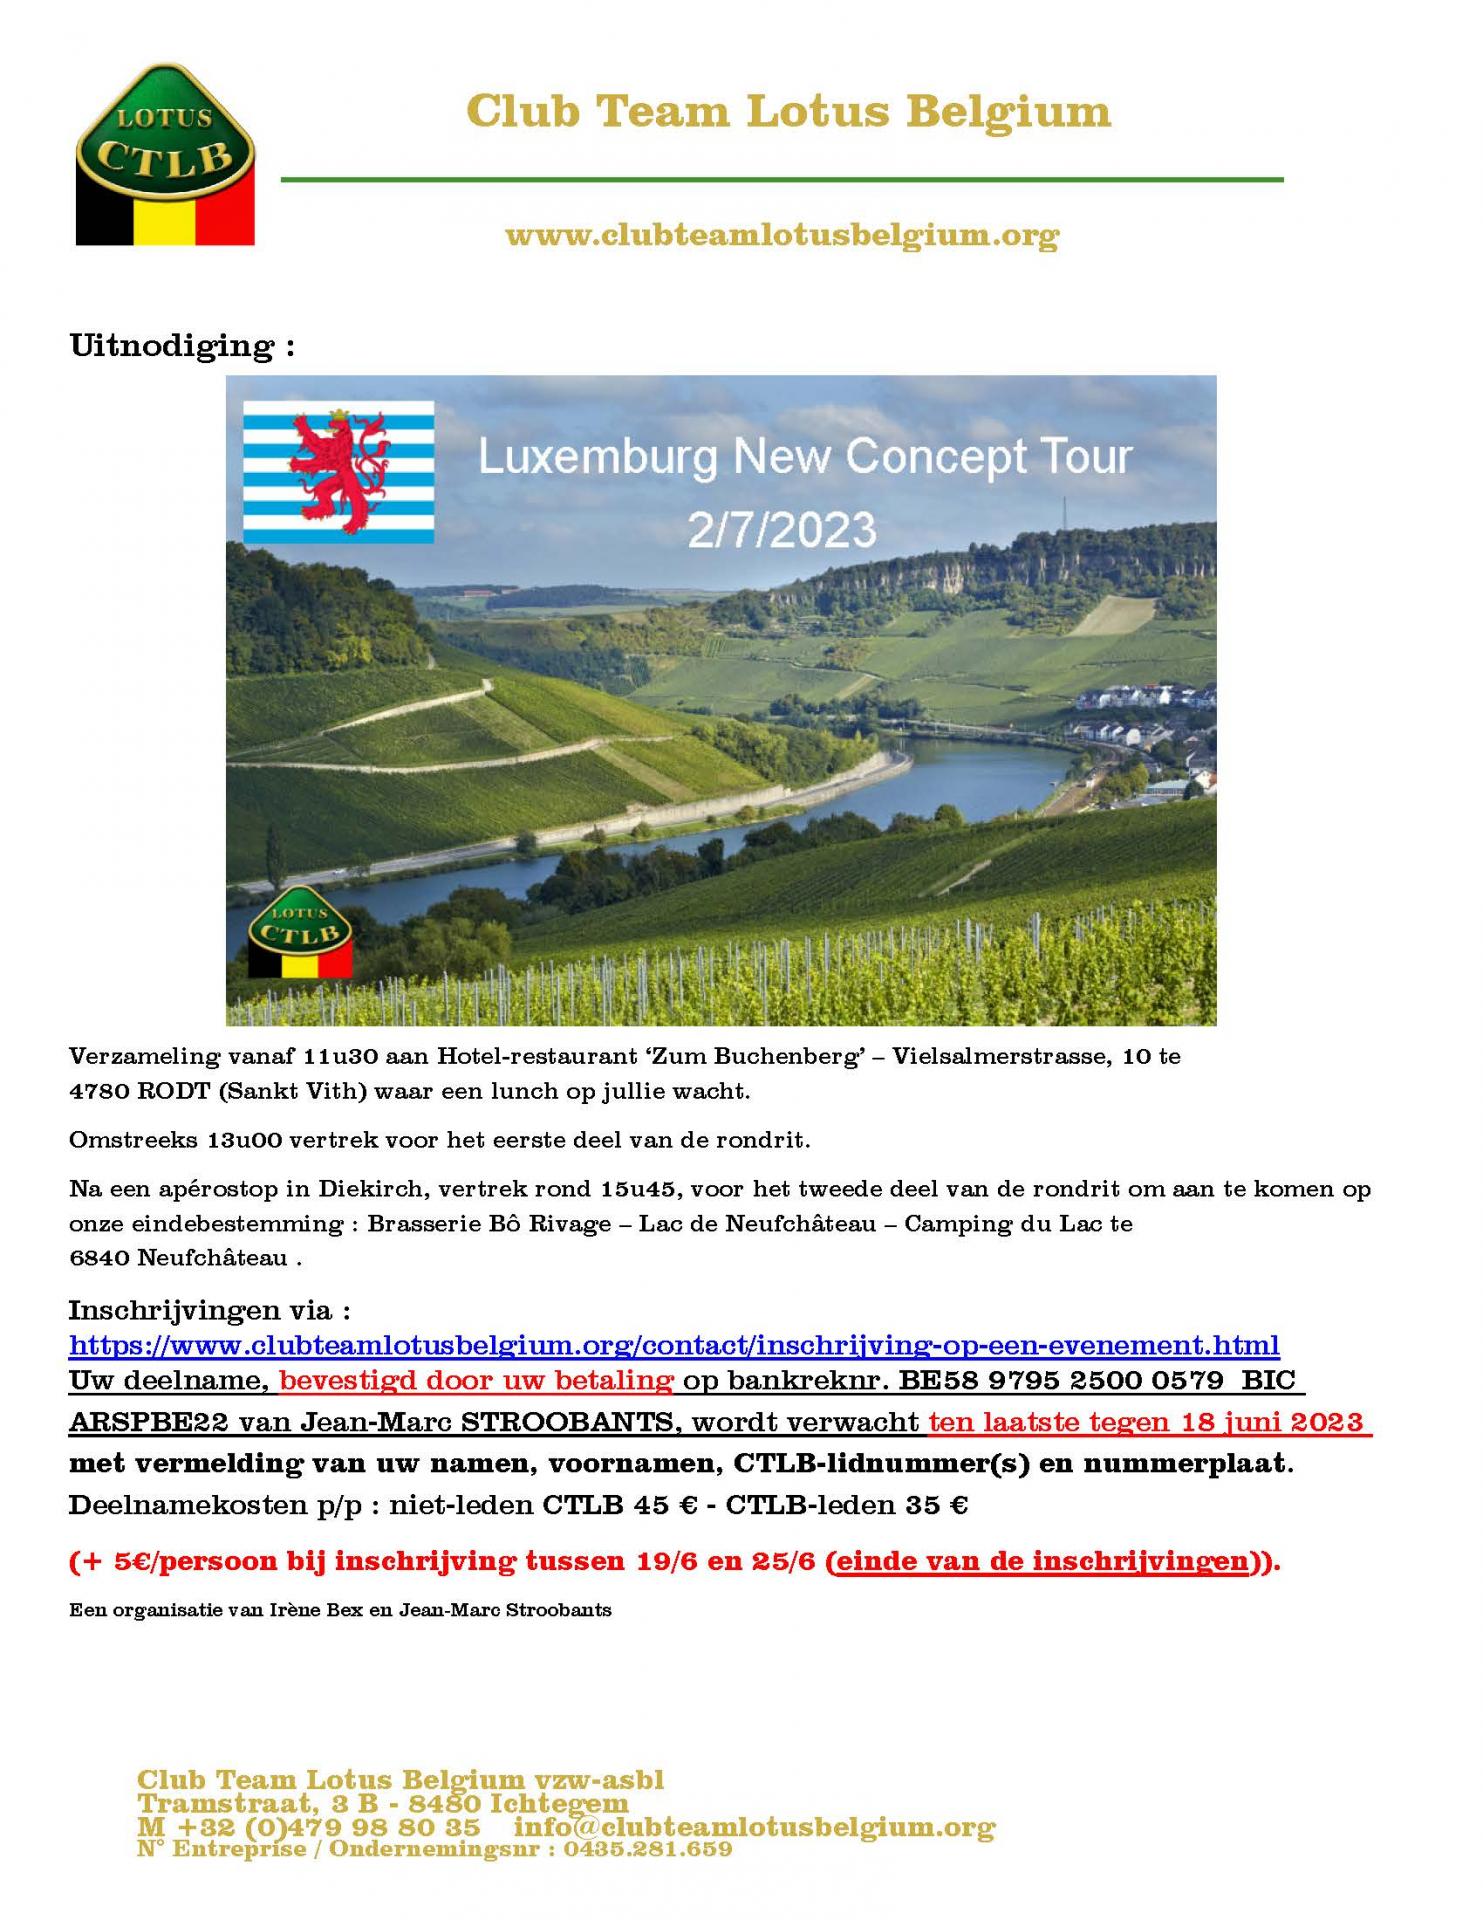 Uitnodiging luxemburg